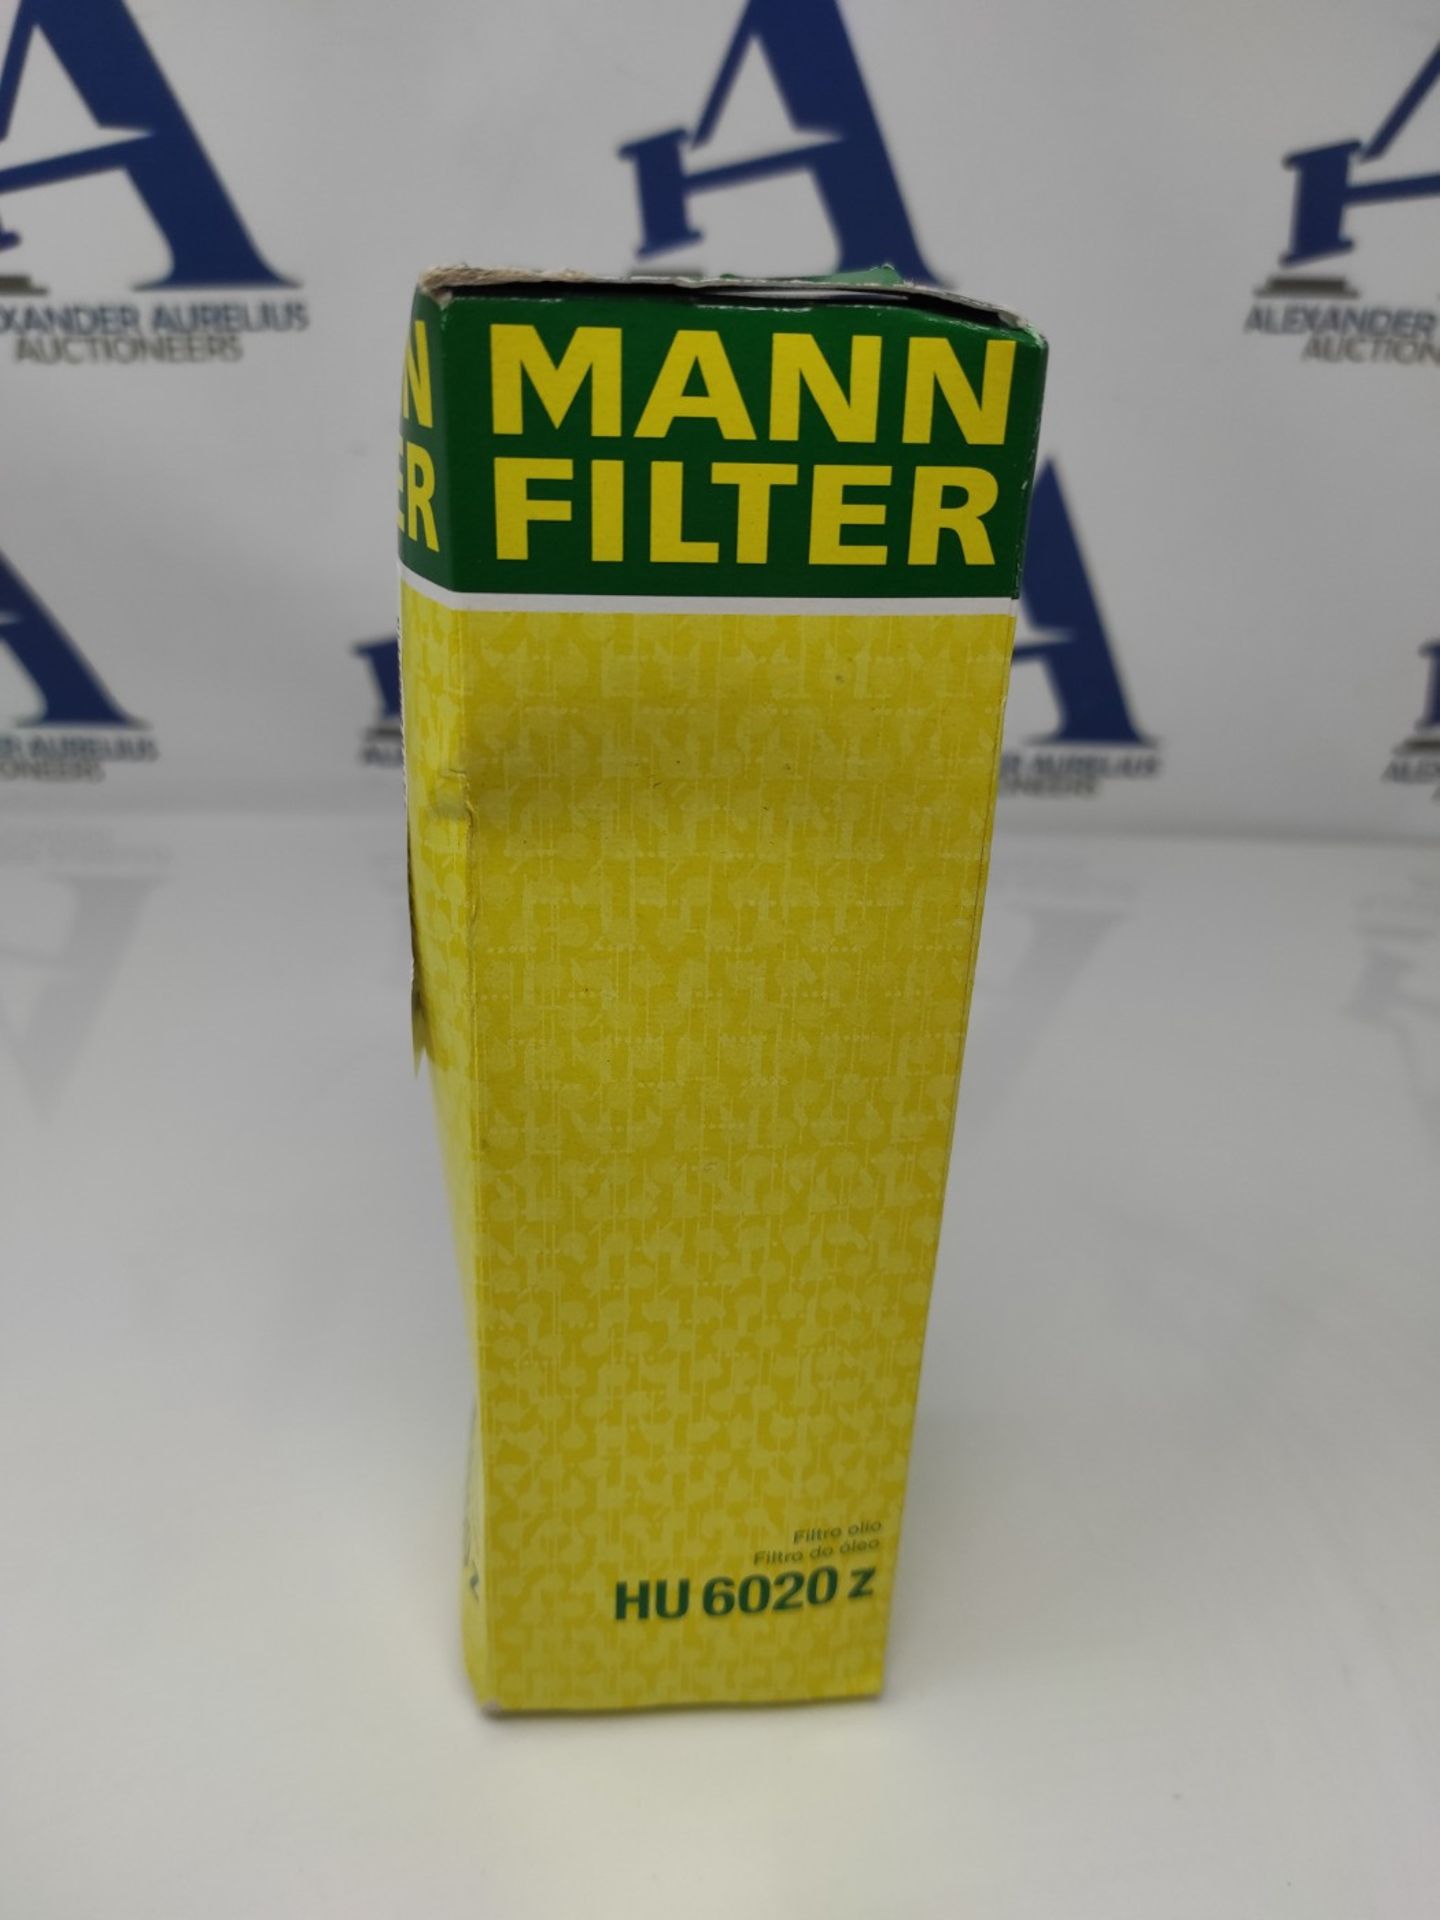 MANN-FILTER HU 6020 z Oil Filter - Oil Filter Set with Seal - For Cars - Image 2 of 3